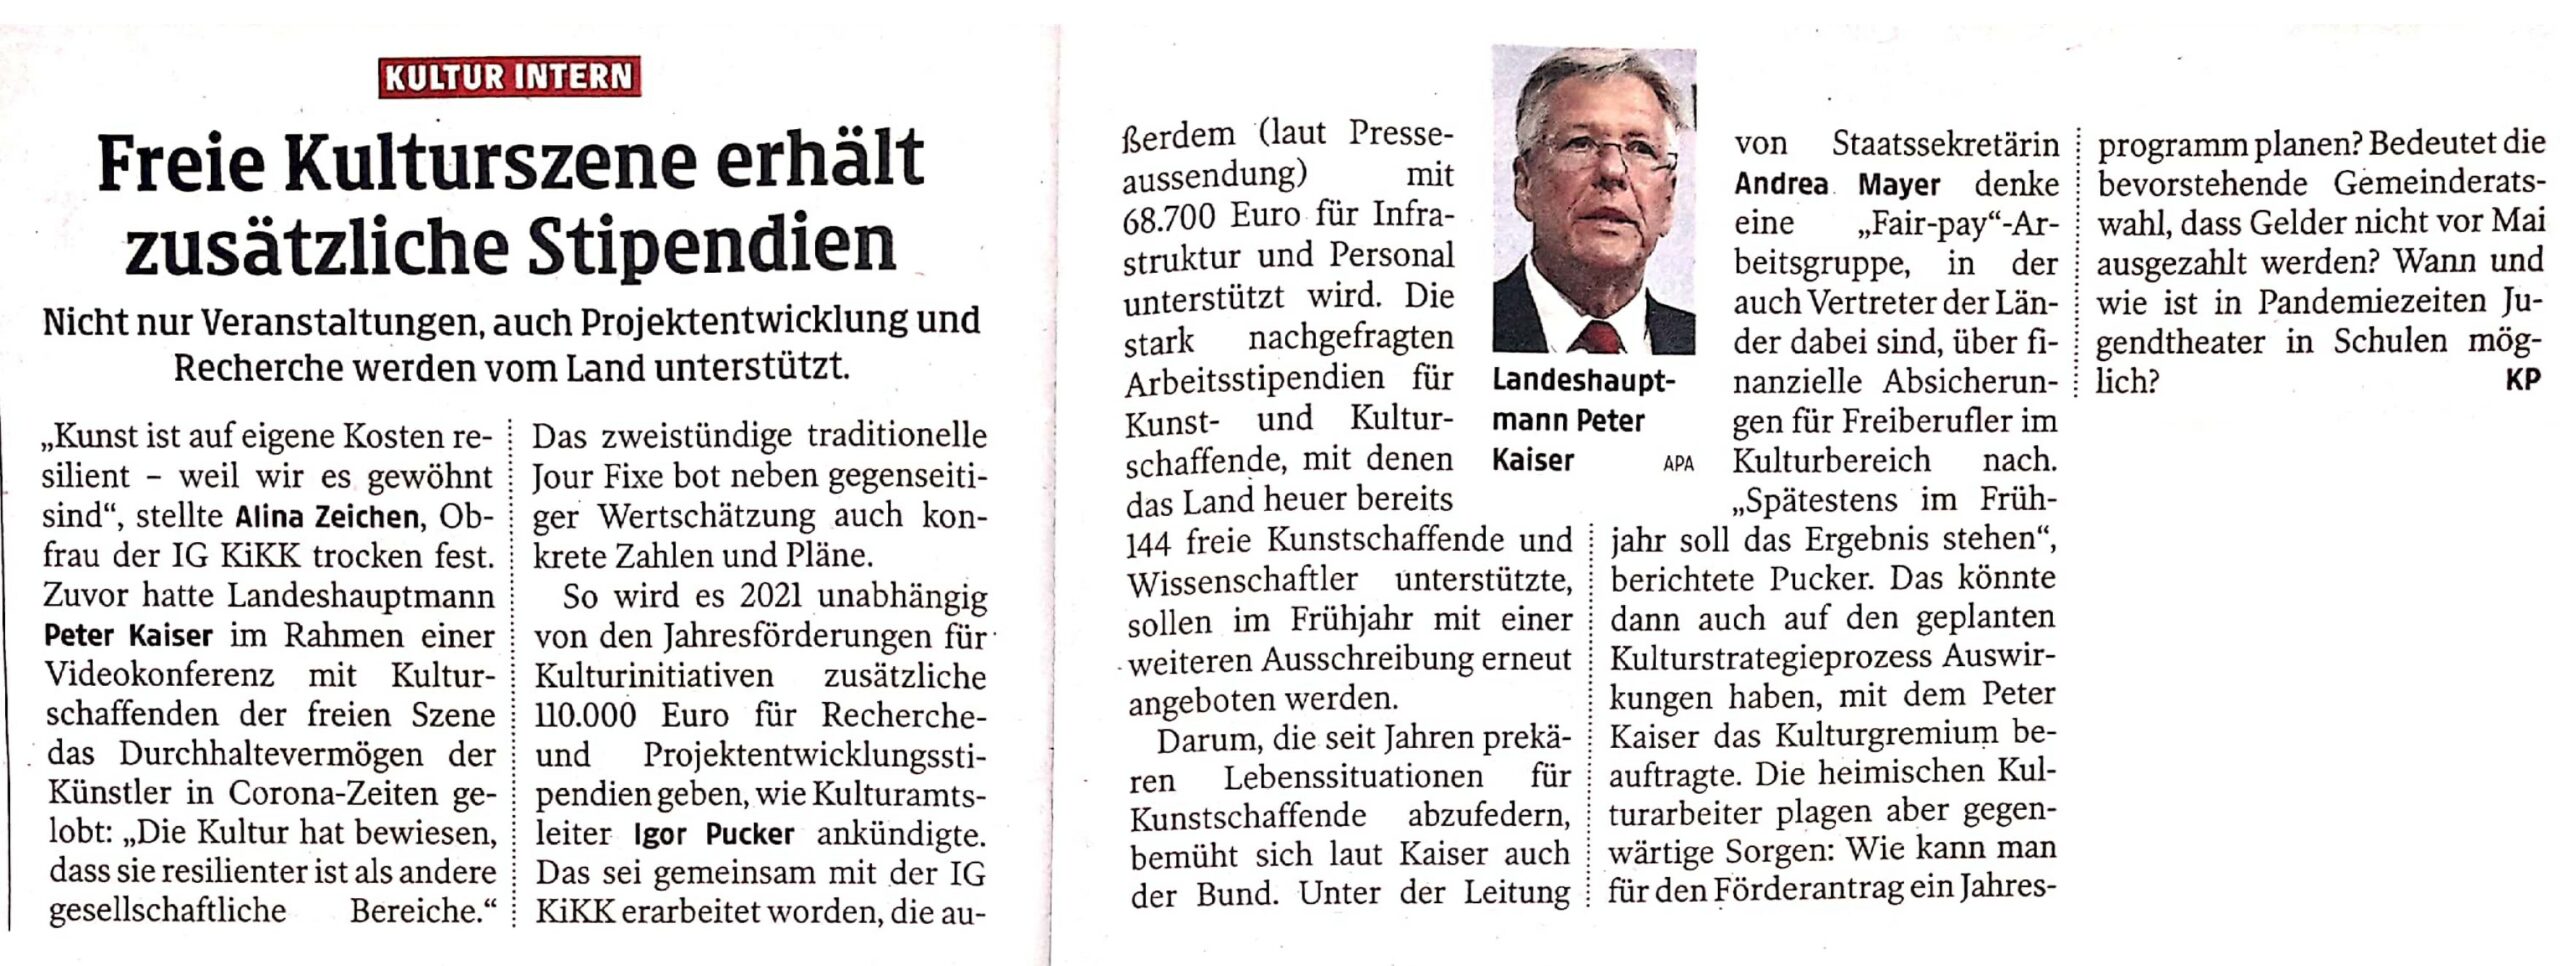 Bericht Kleine Zeitung Jour Fixe Kaiser 2020